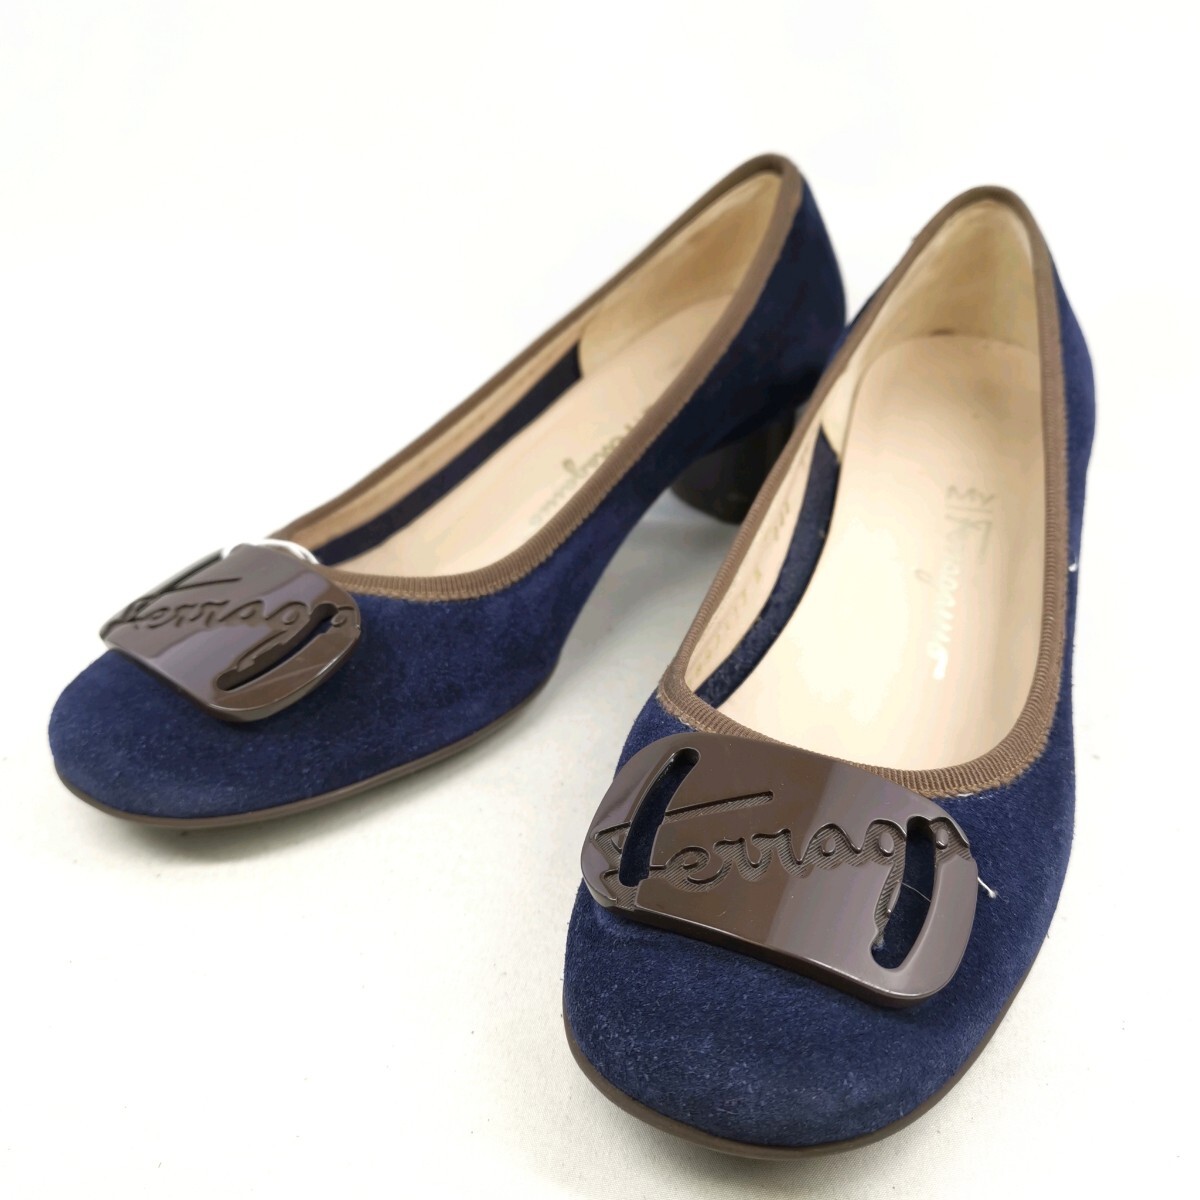 B #【商品ランク:B】 サルヴァトーレ フェラガモ Salvatore Ferragamo ヴァラ ラウンドトゥ パンプス レディース シューズ 婦人靴の画像1